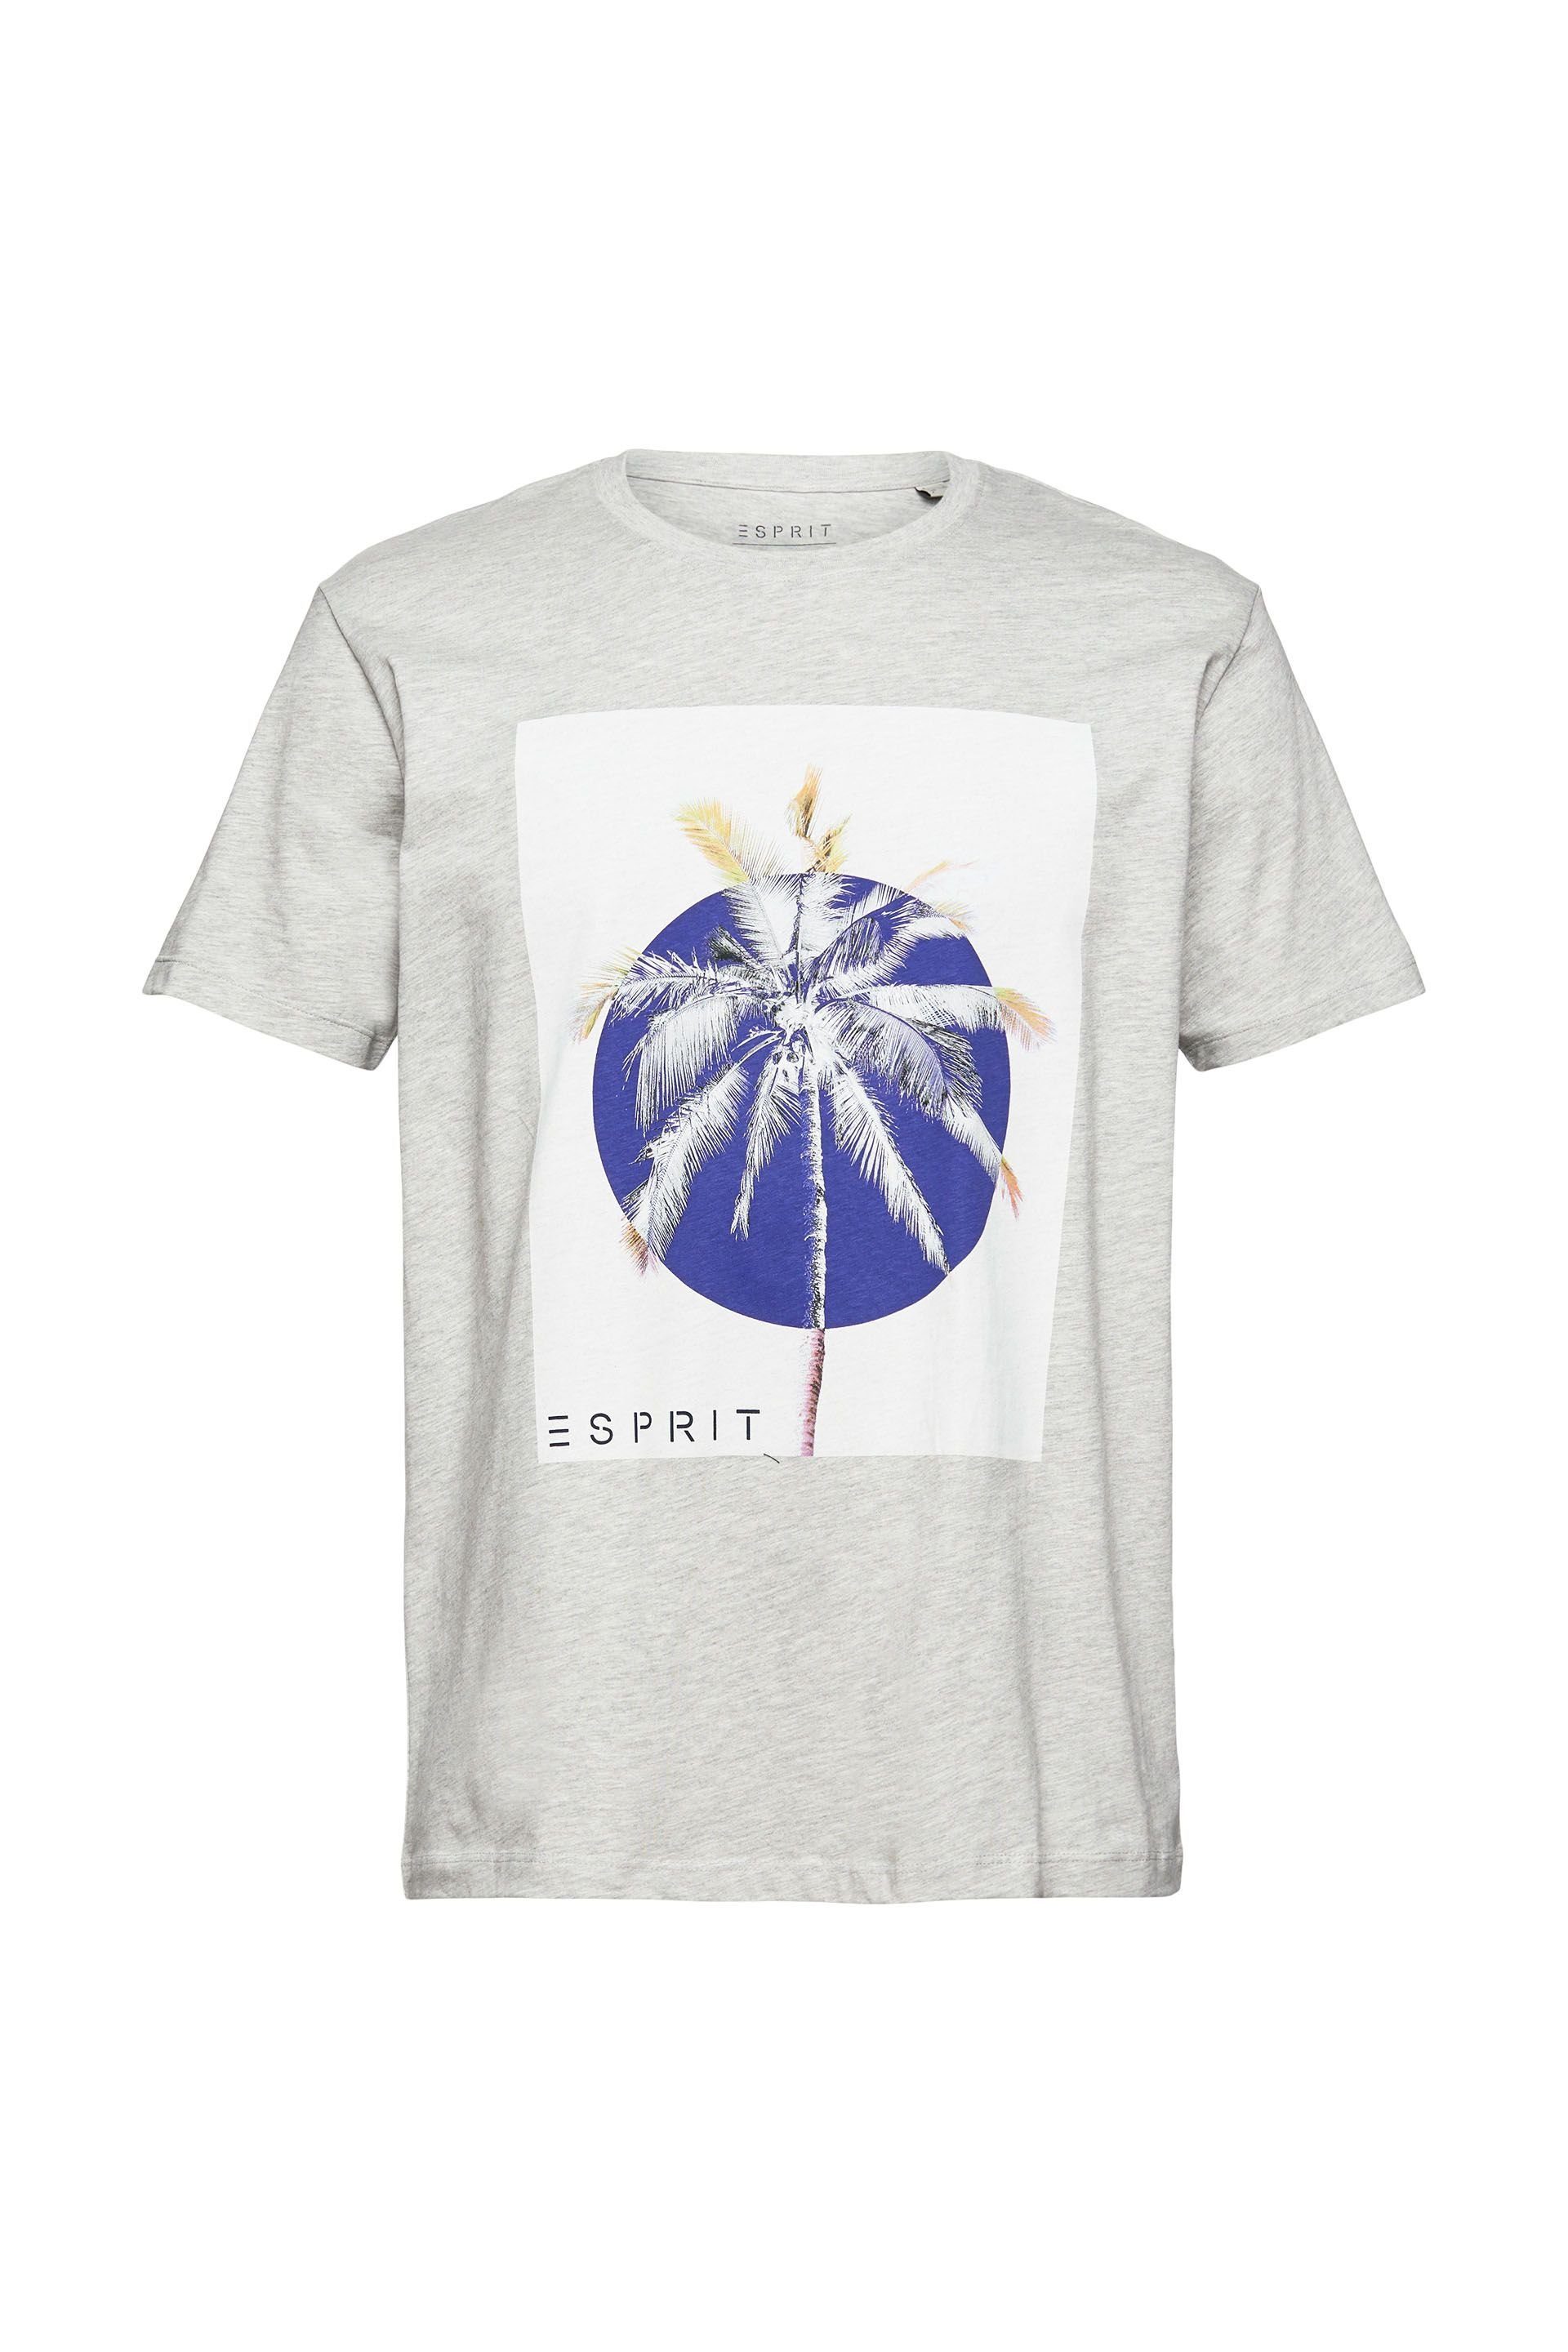 Esprit T-Shirt light grey